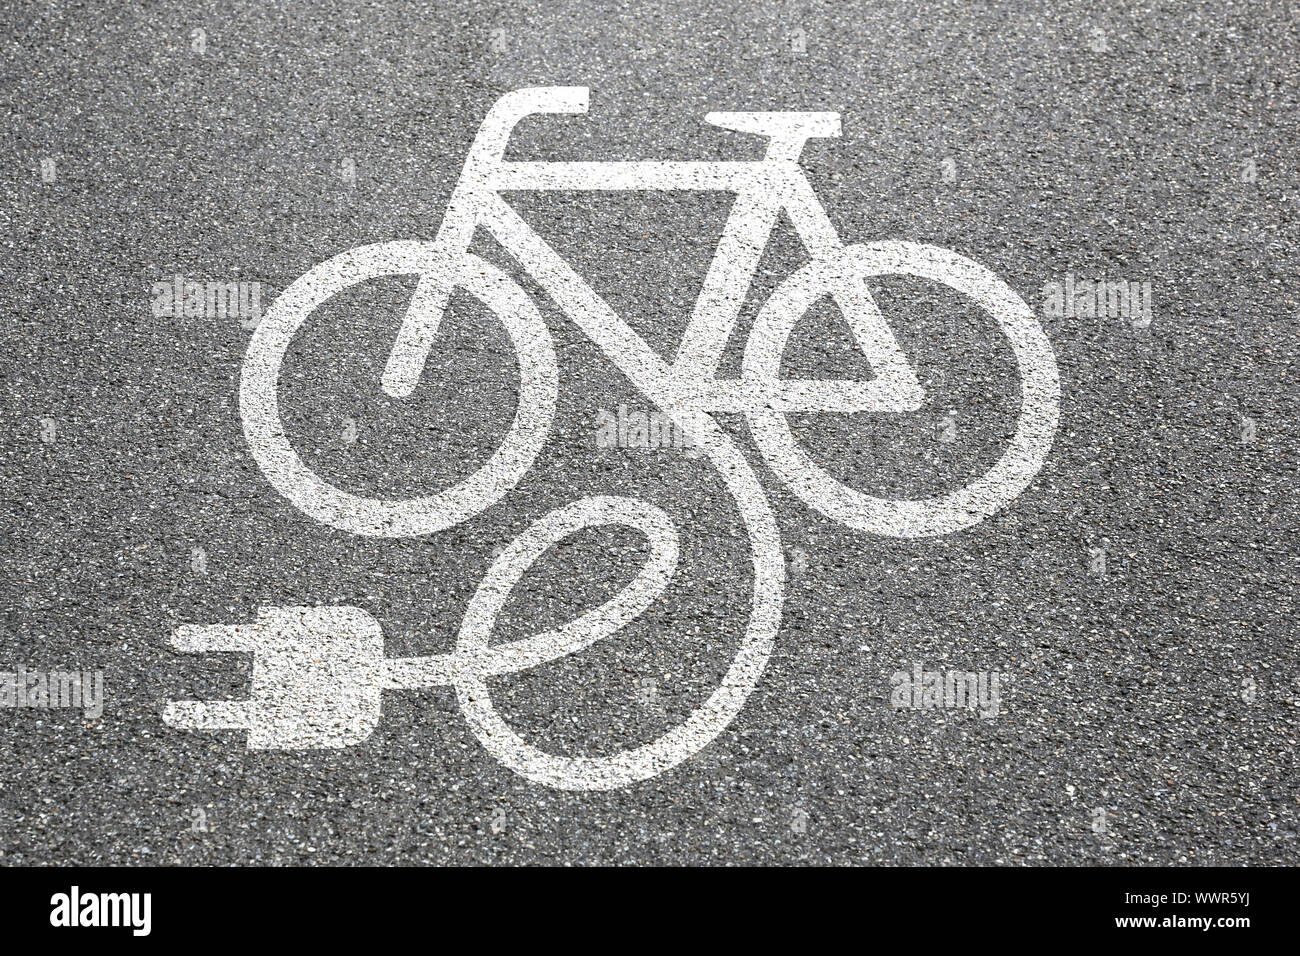 E-Bike Ebike E Bike Pedelec electric bicycle bicycle city environment environmentally friendly Stock Photo